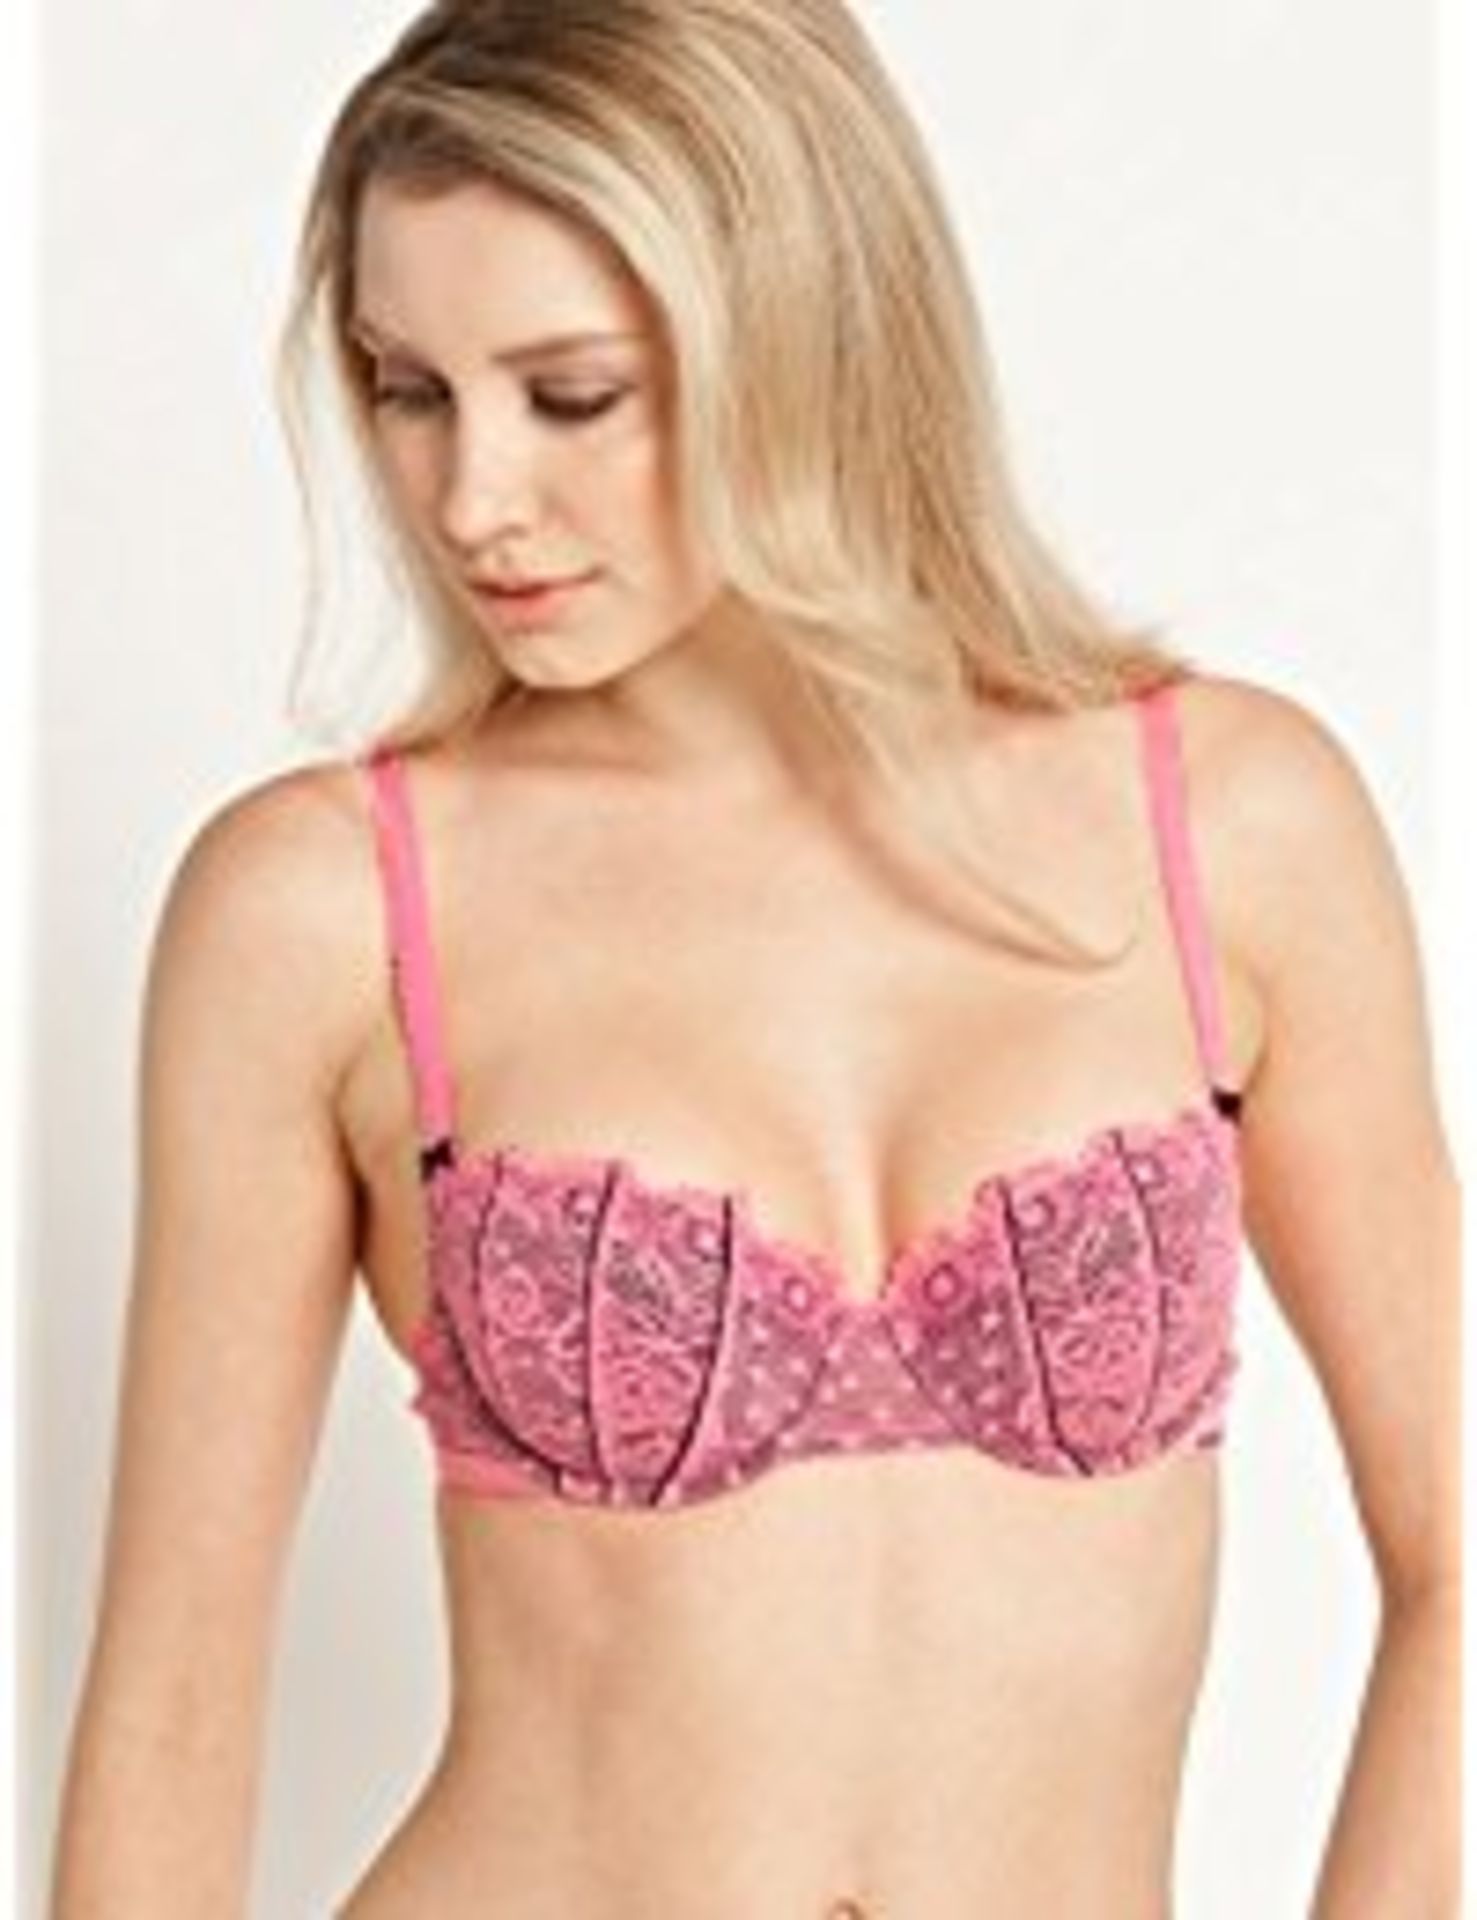 + VAT Brand New A Lot Of Three DKNY Pink/Black Balconette Bras Size 36A 19.95 Euro Each (Amazon)